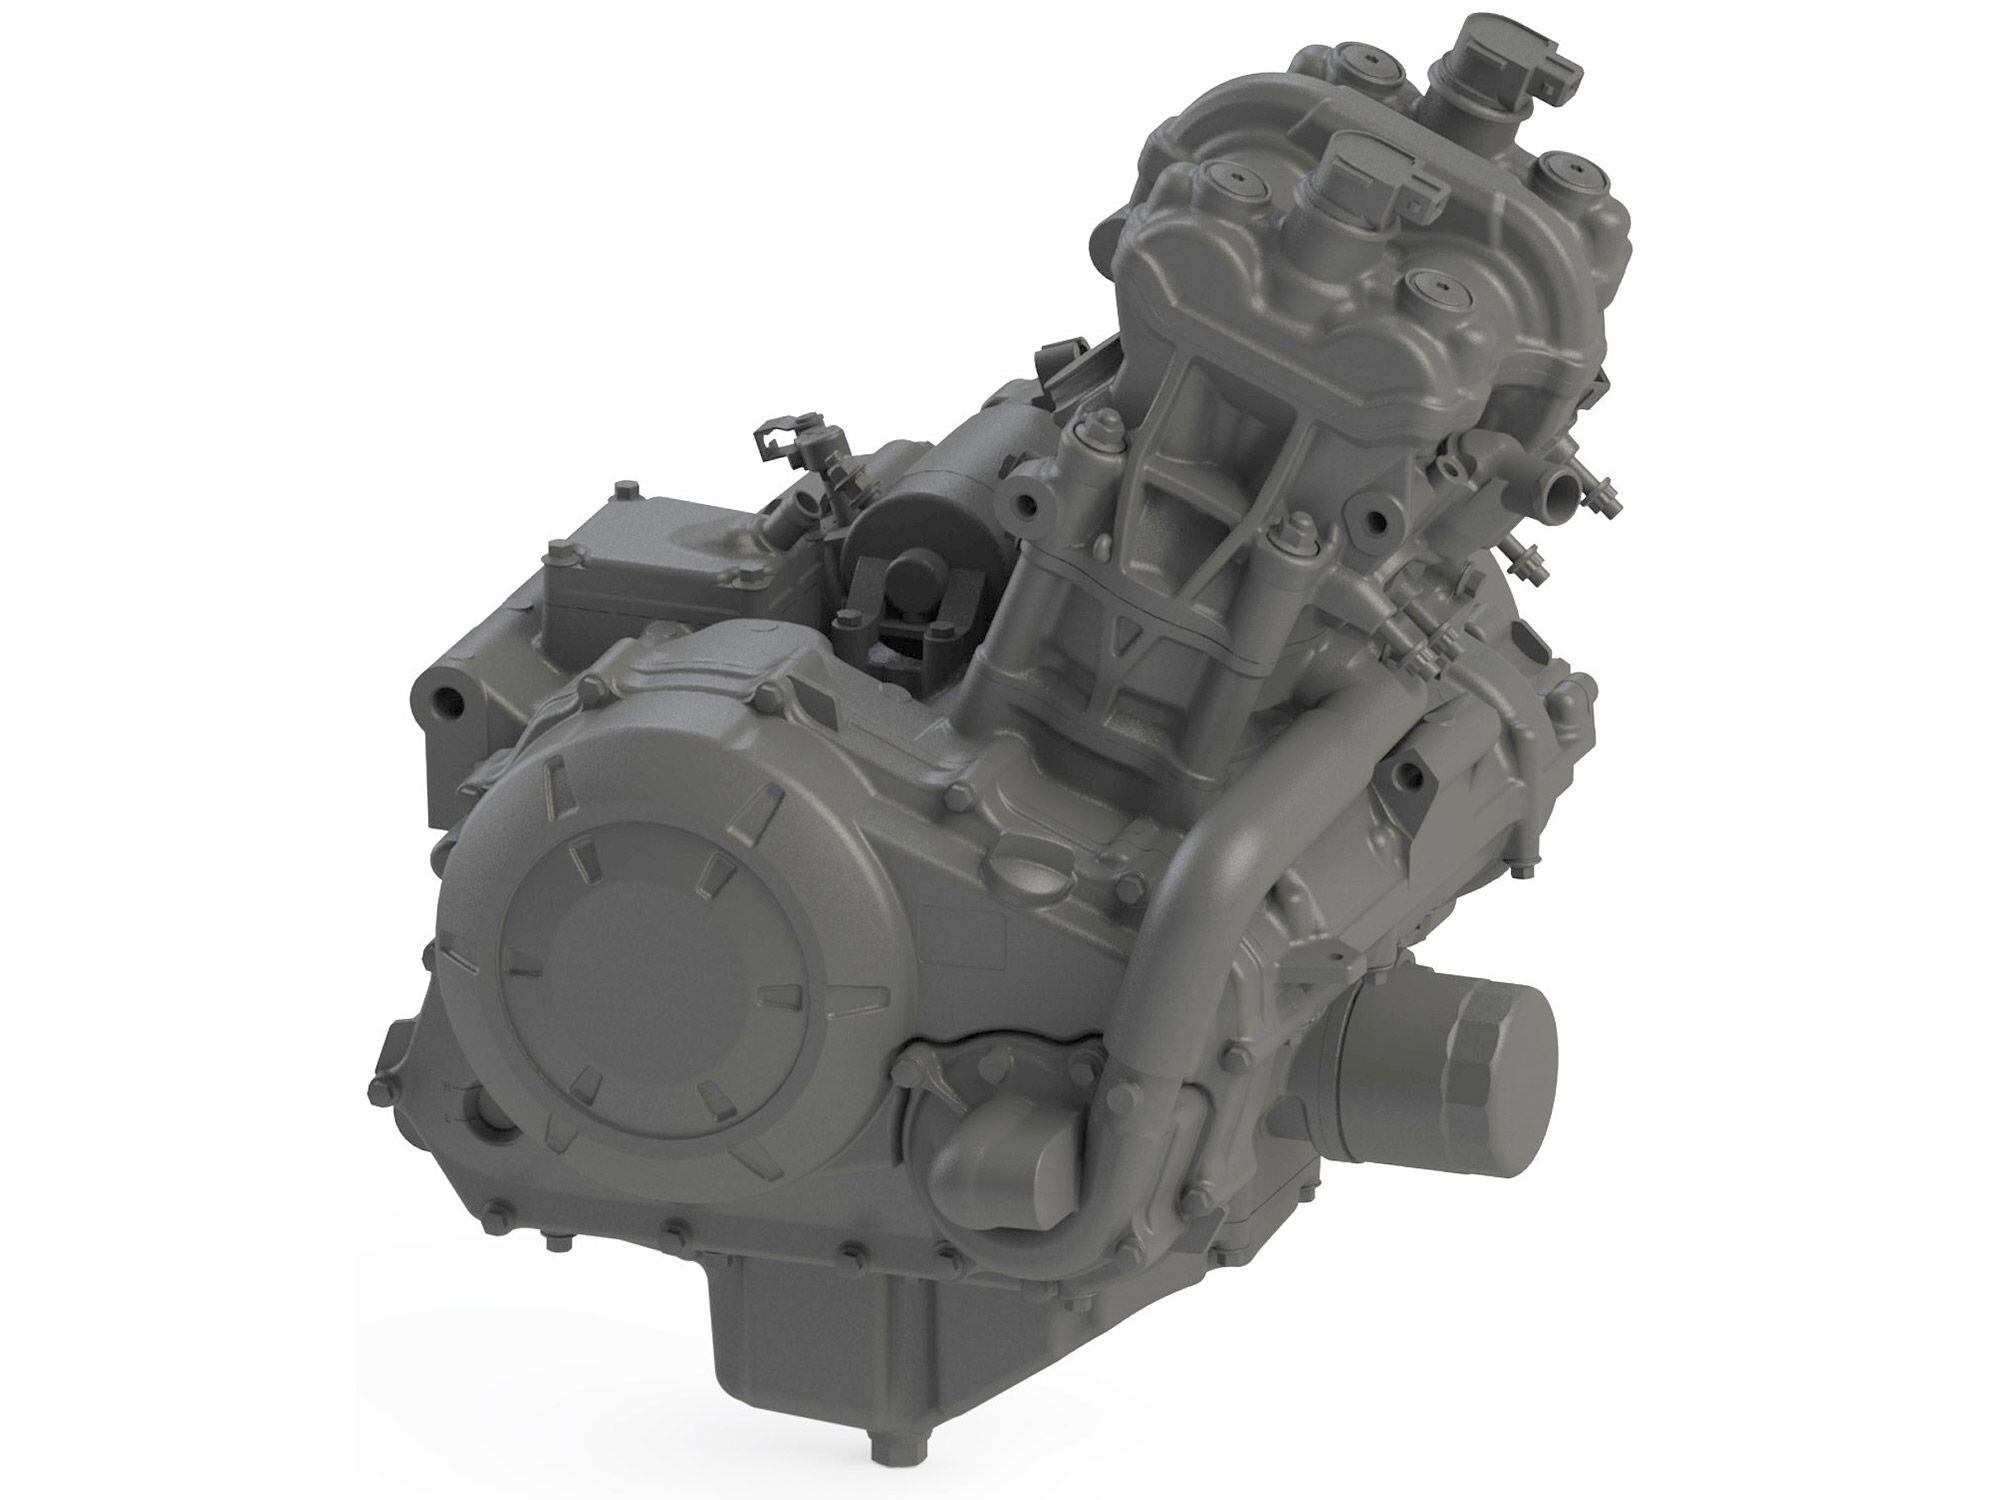 CAD drawings of Aprilia’s new 250cc four-stroke DOHC twin.